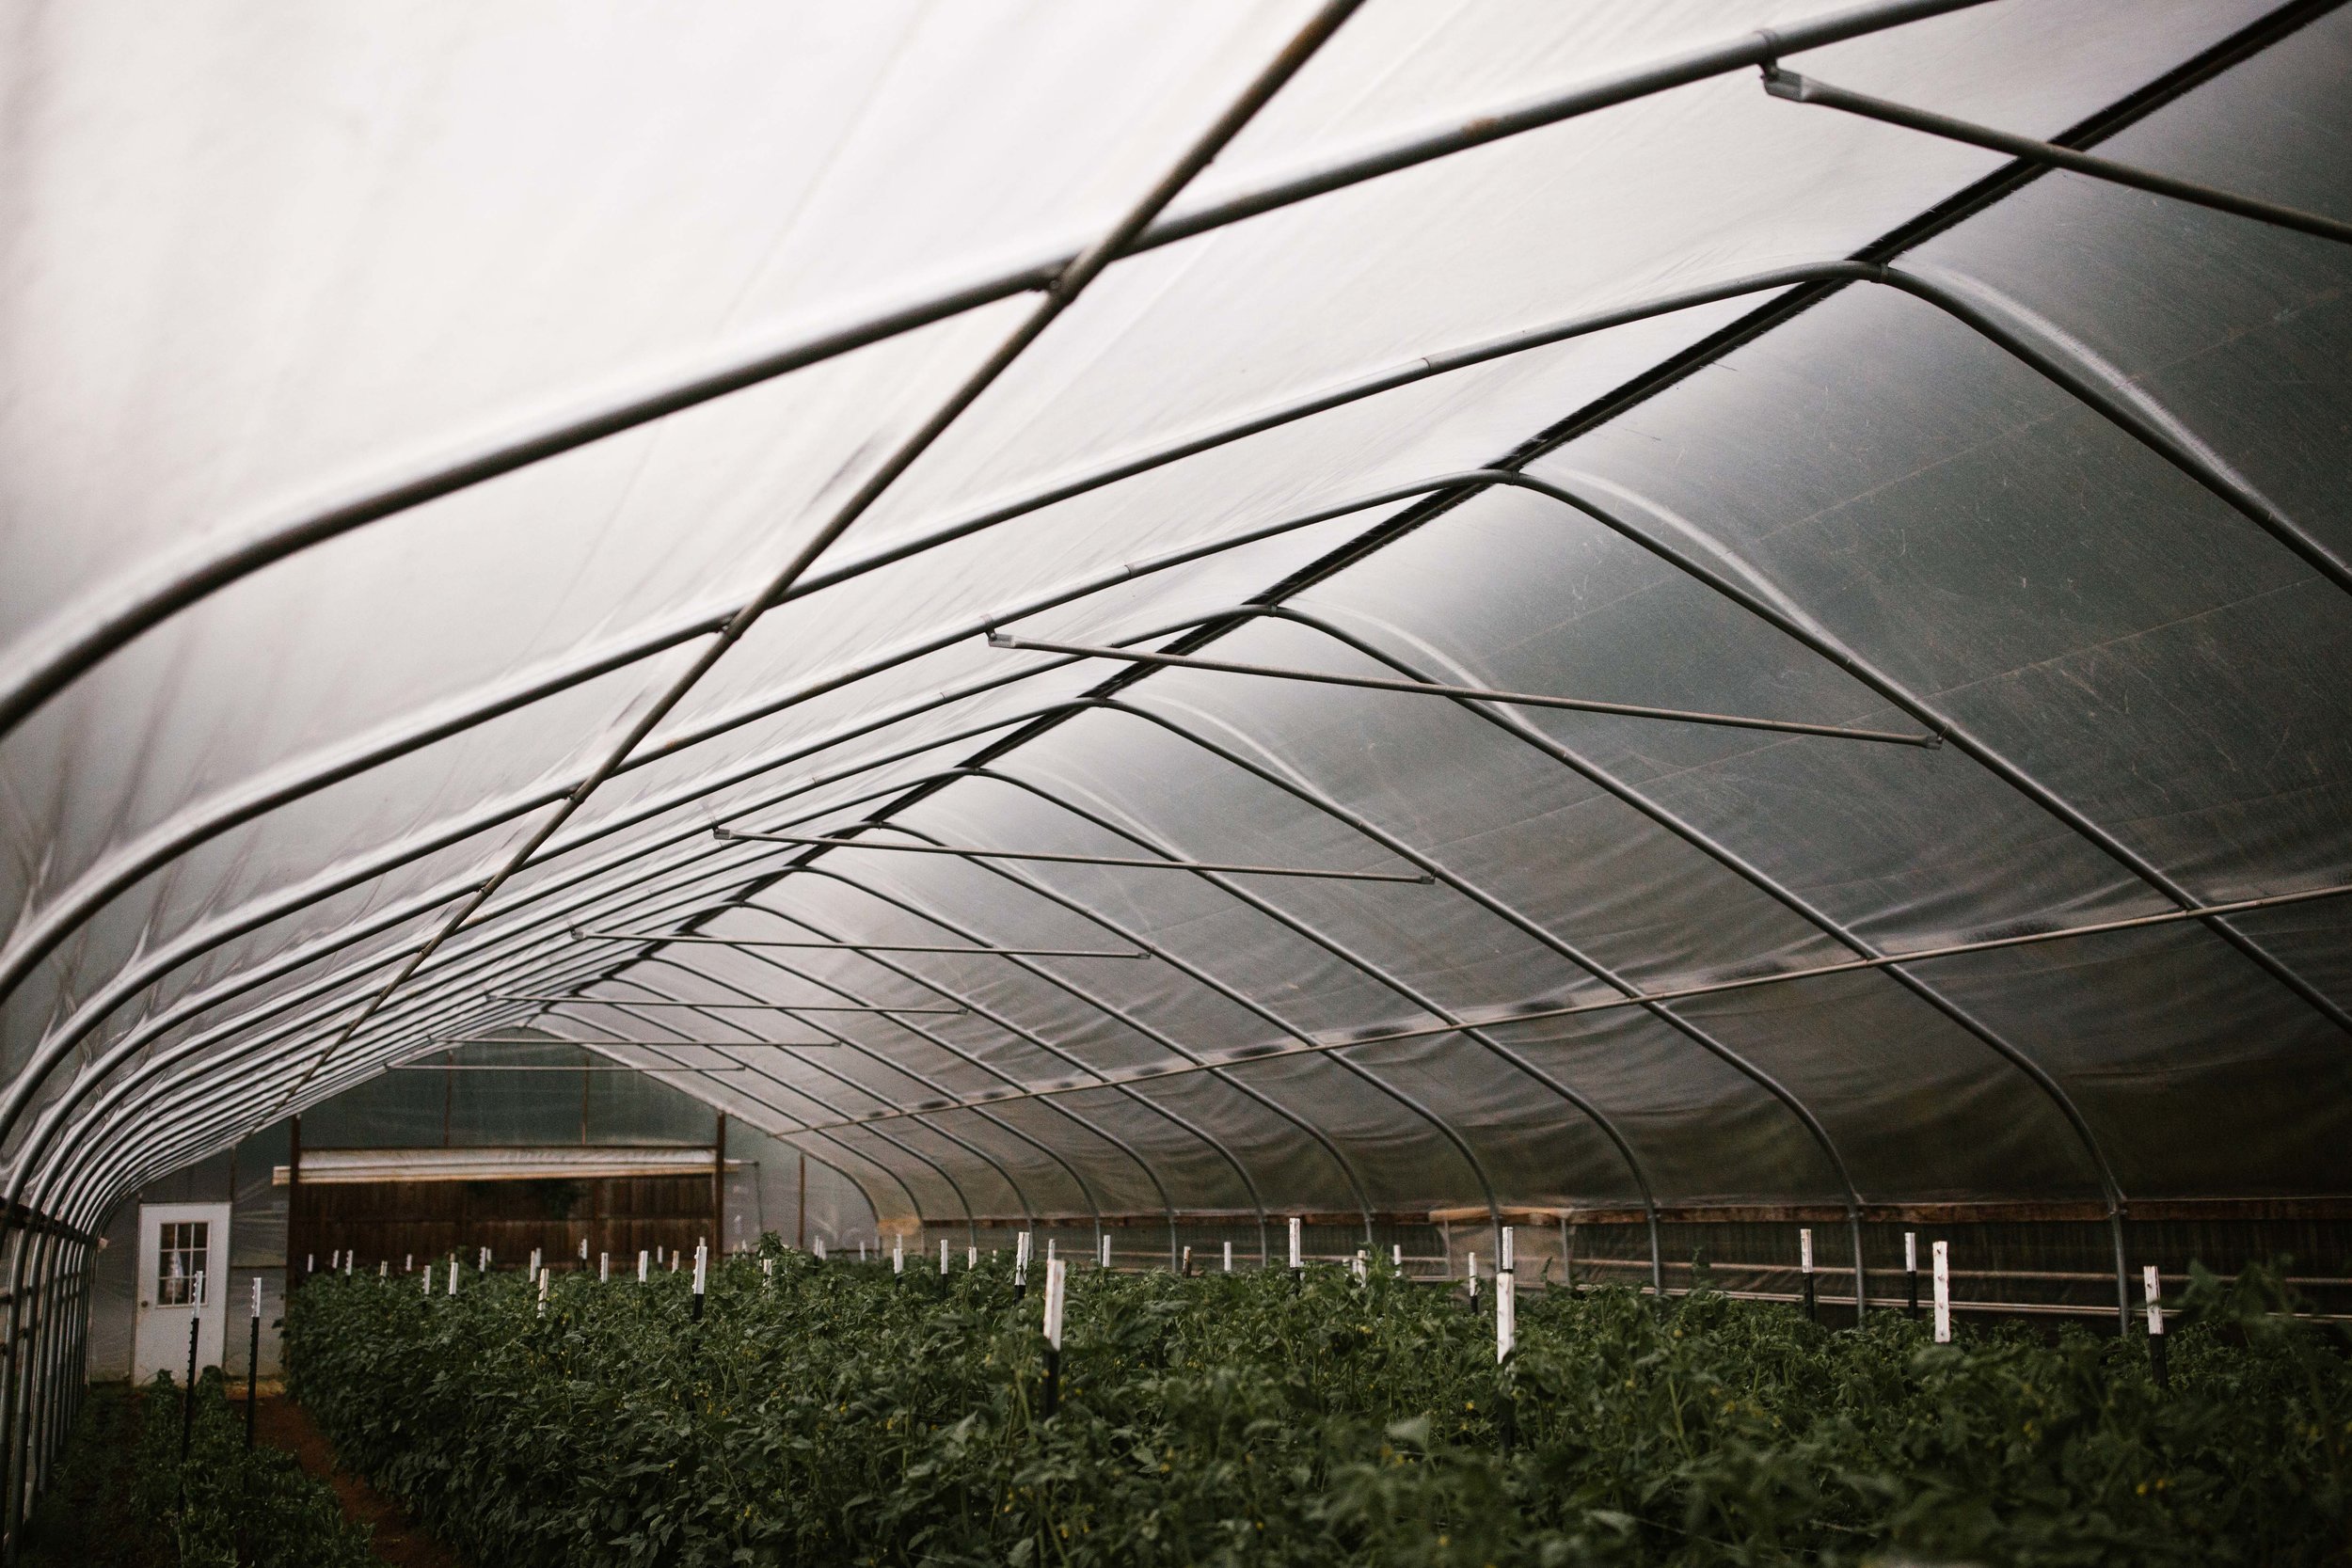 Working greenhouse interior